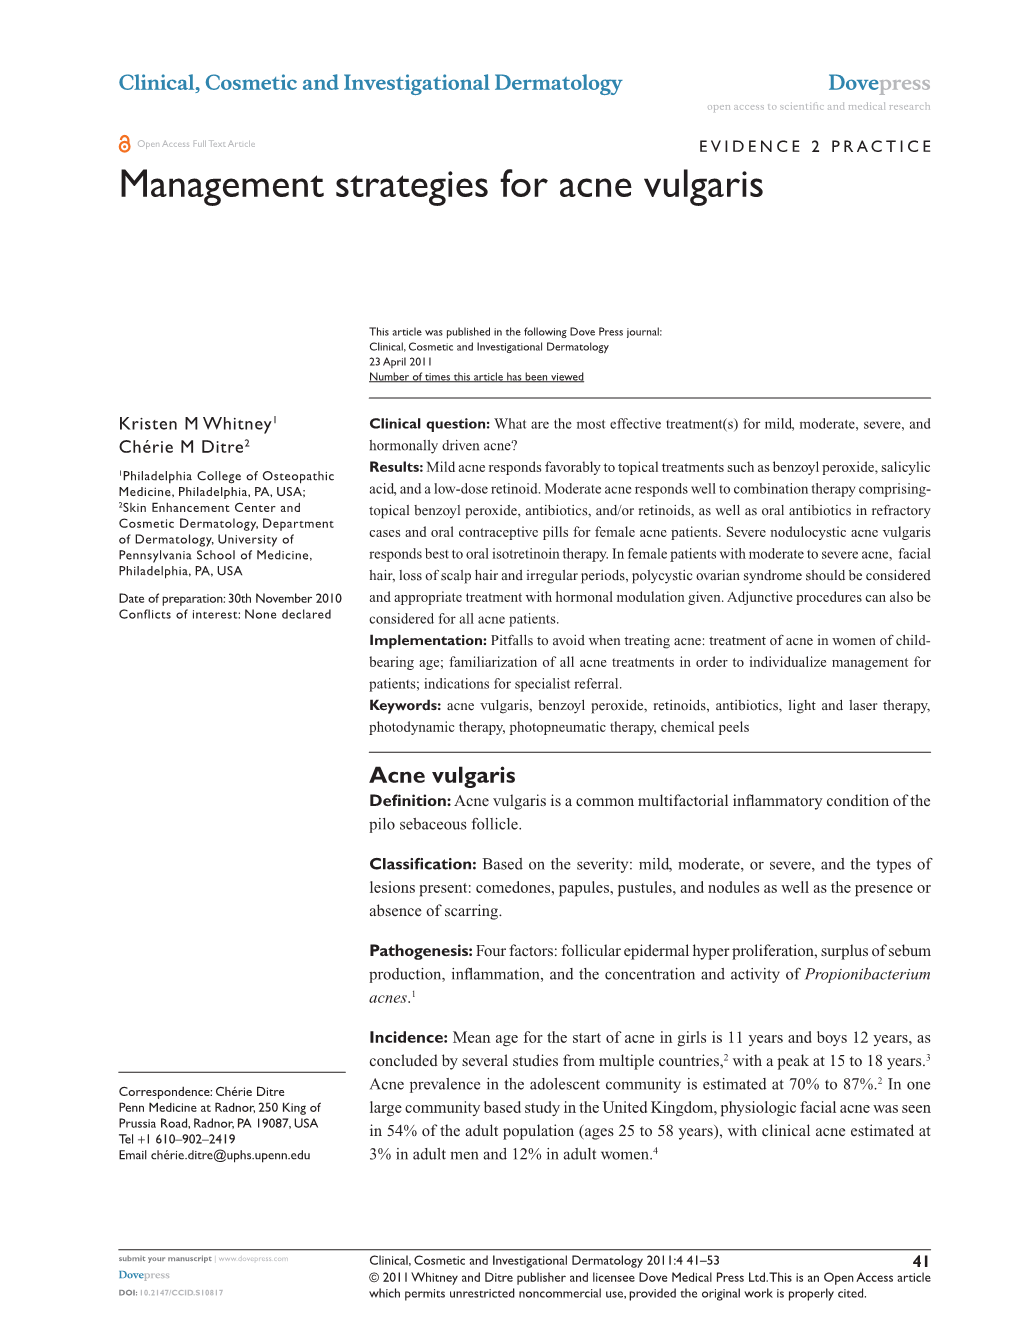 Management Strategies for Acne Vulgaris